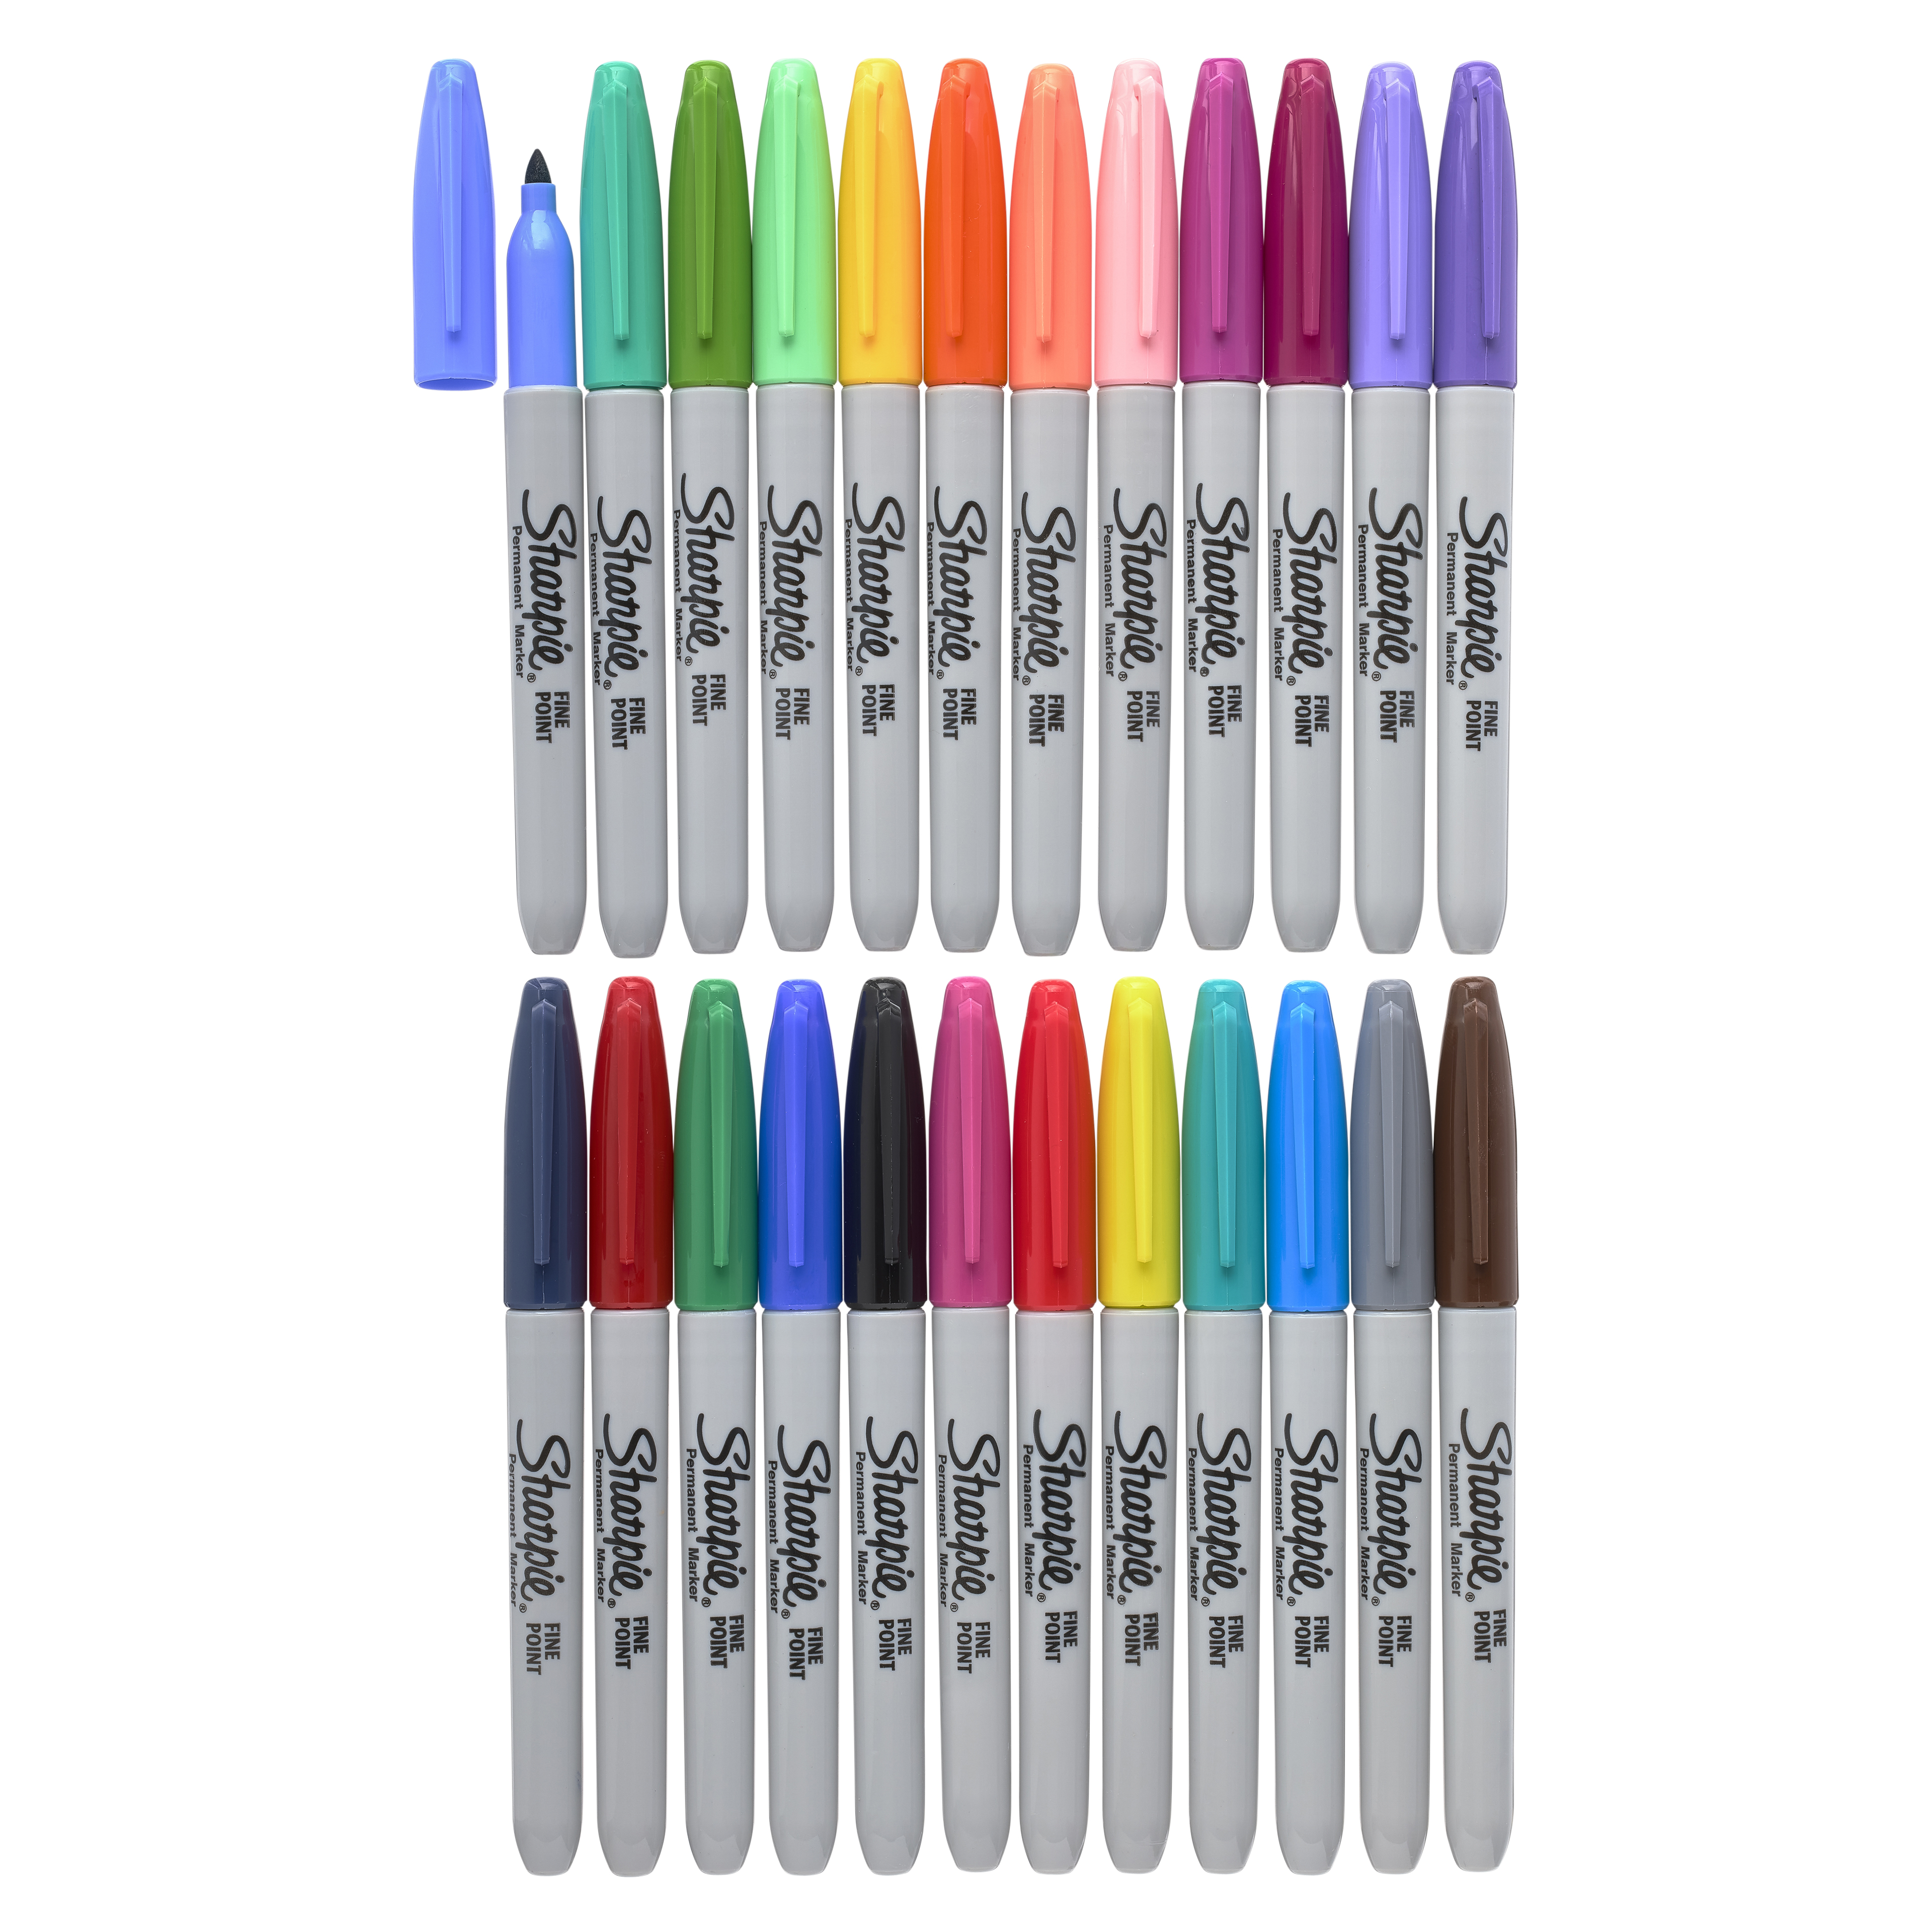 Shop for the Sharpie® Color Burst Fine Point Permanent Markers at Michaels